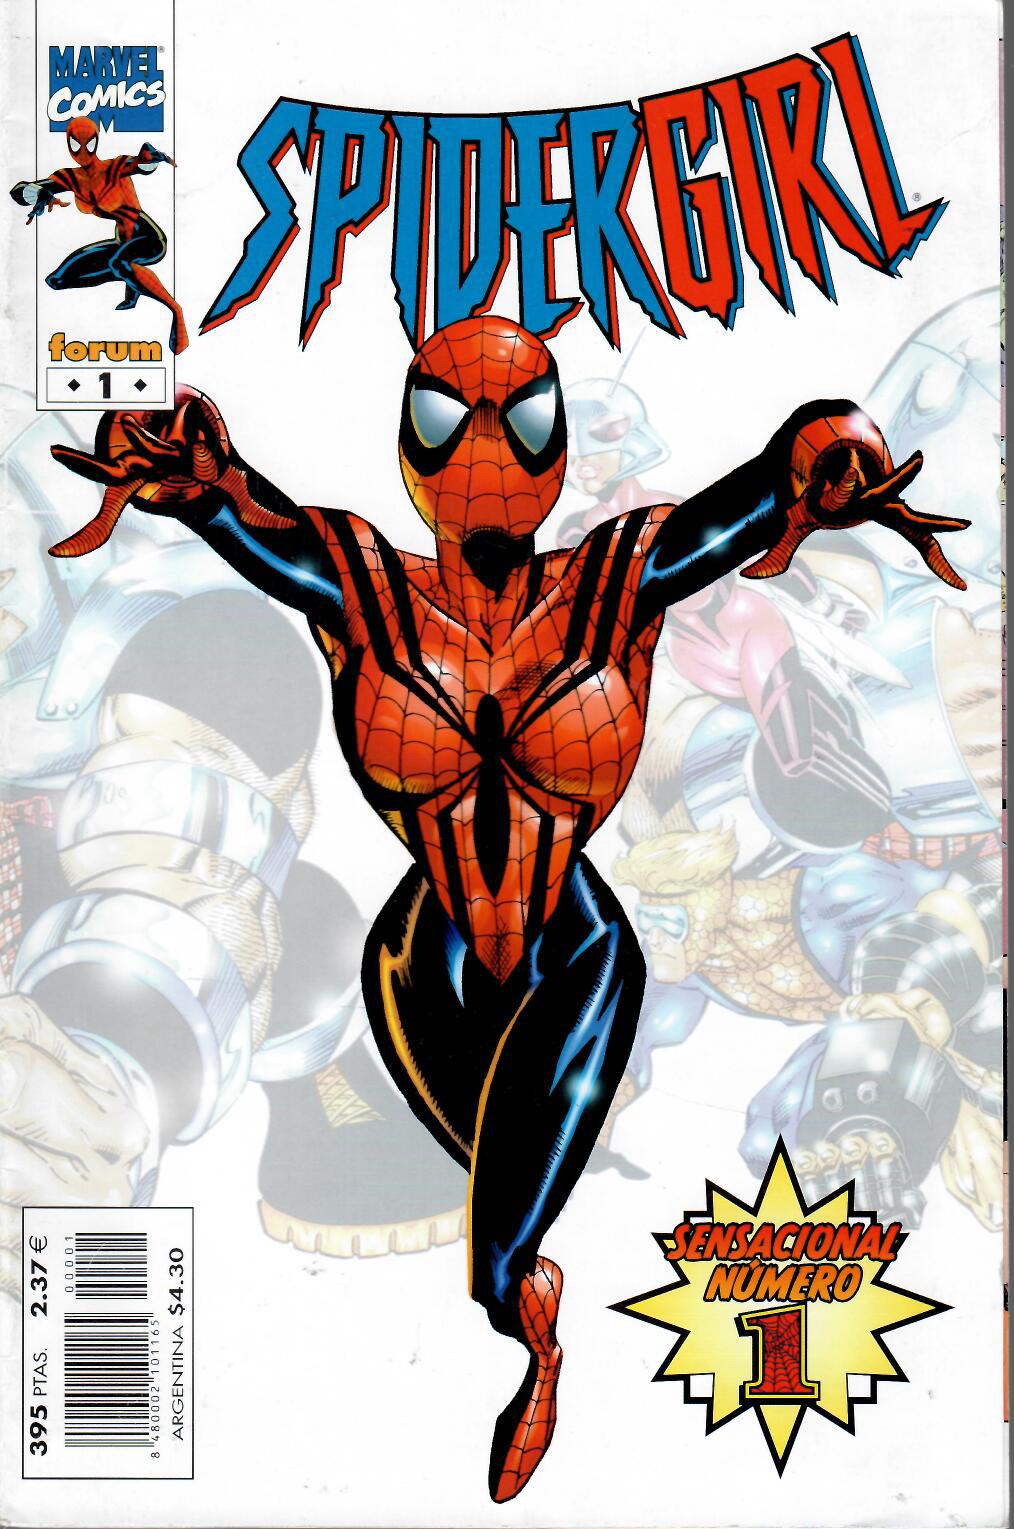 Spidergirl. Forum 2000. Nº 1